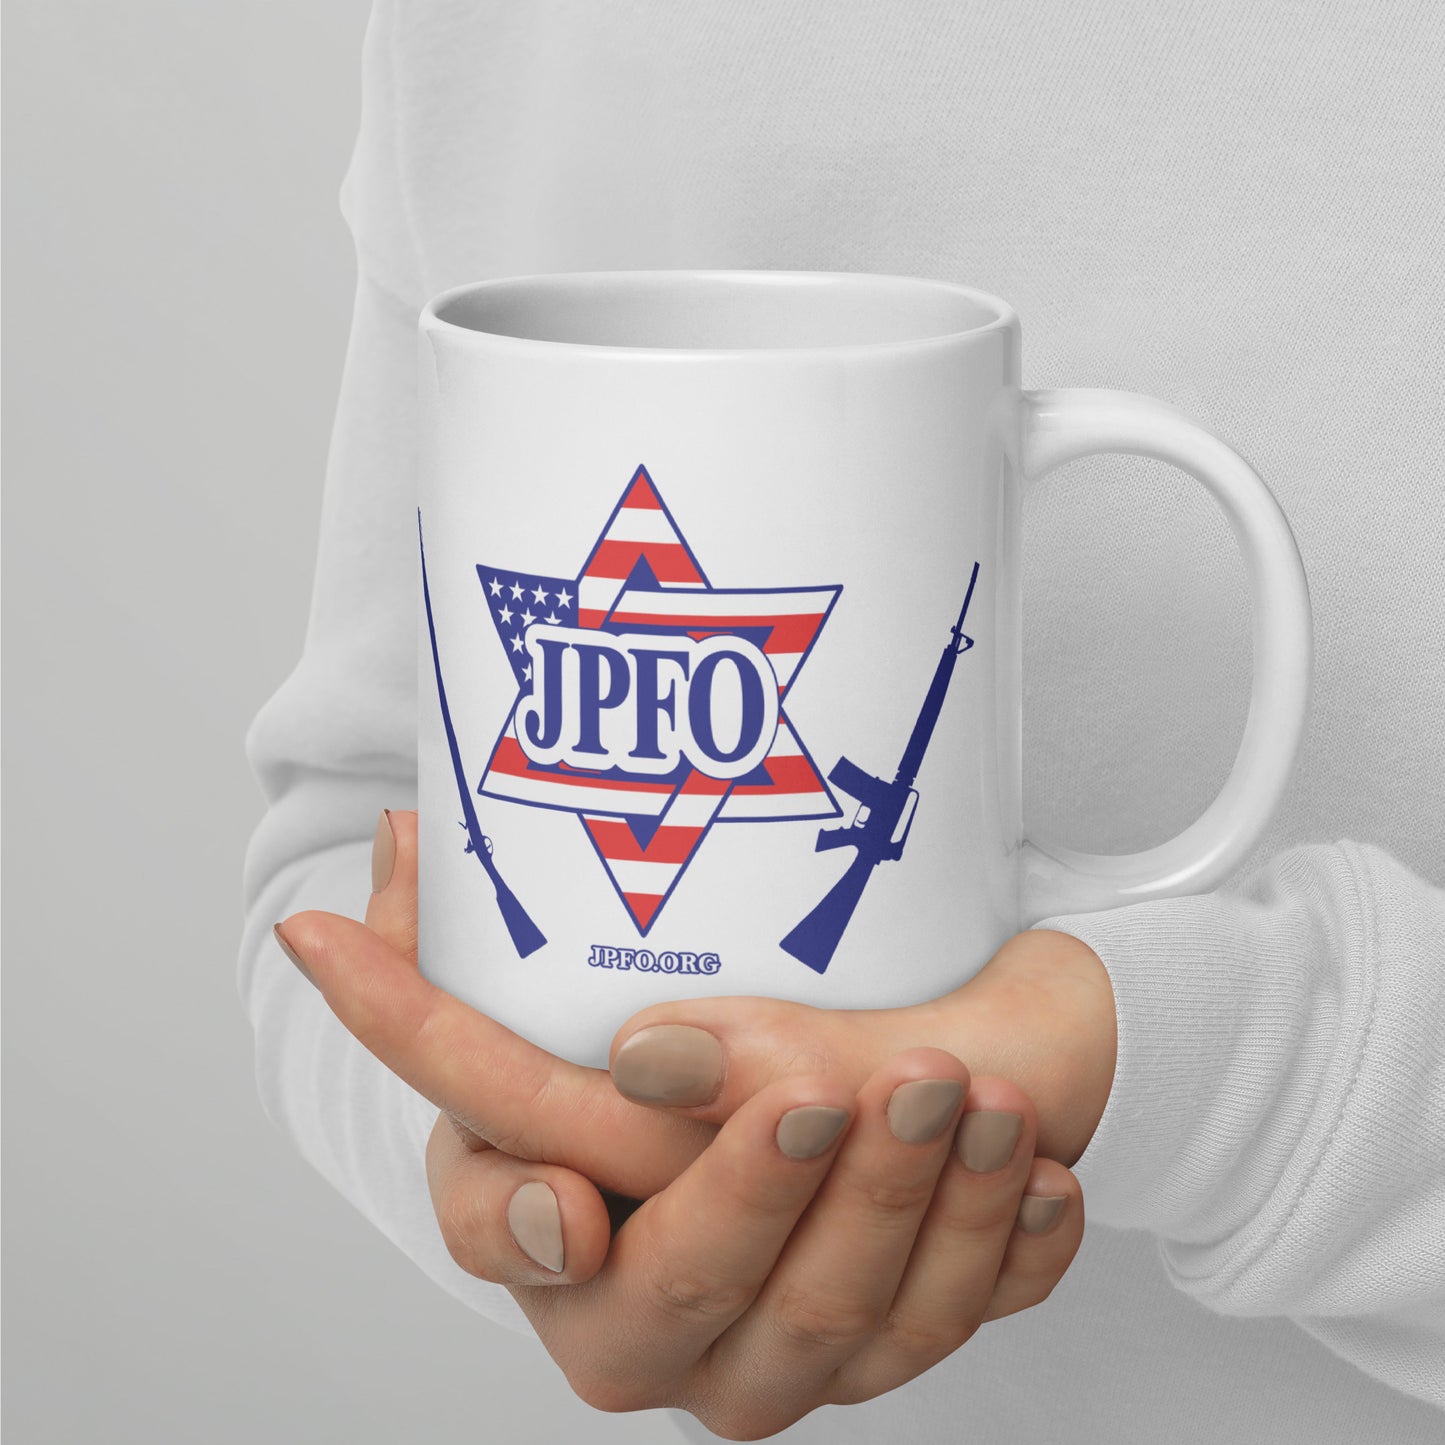 White Glossy Mug With JPFO Logo